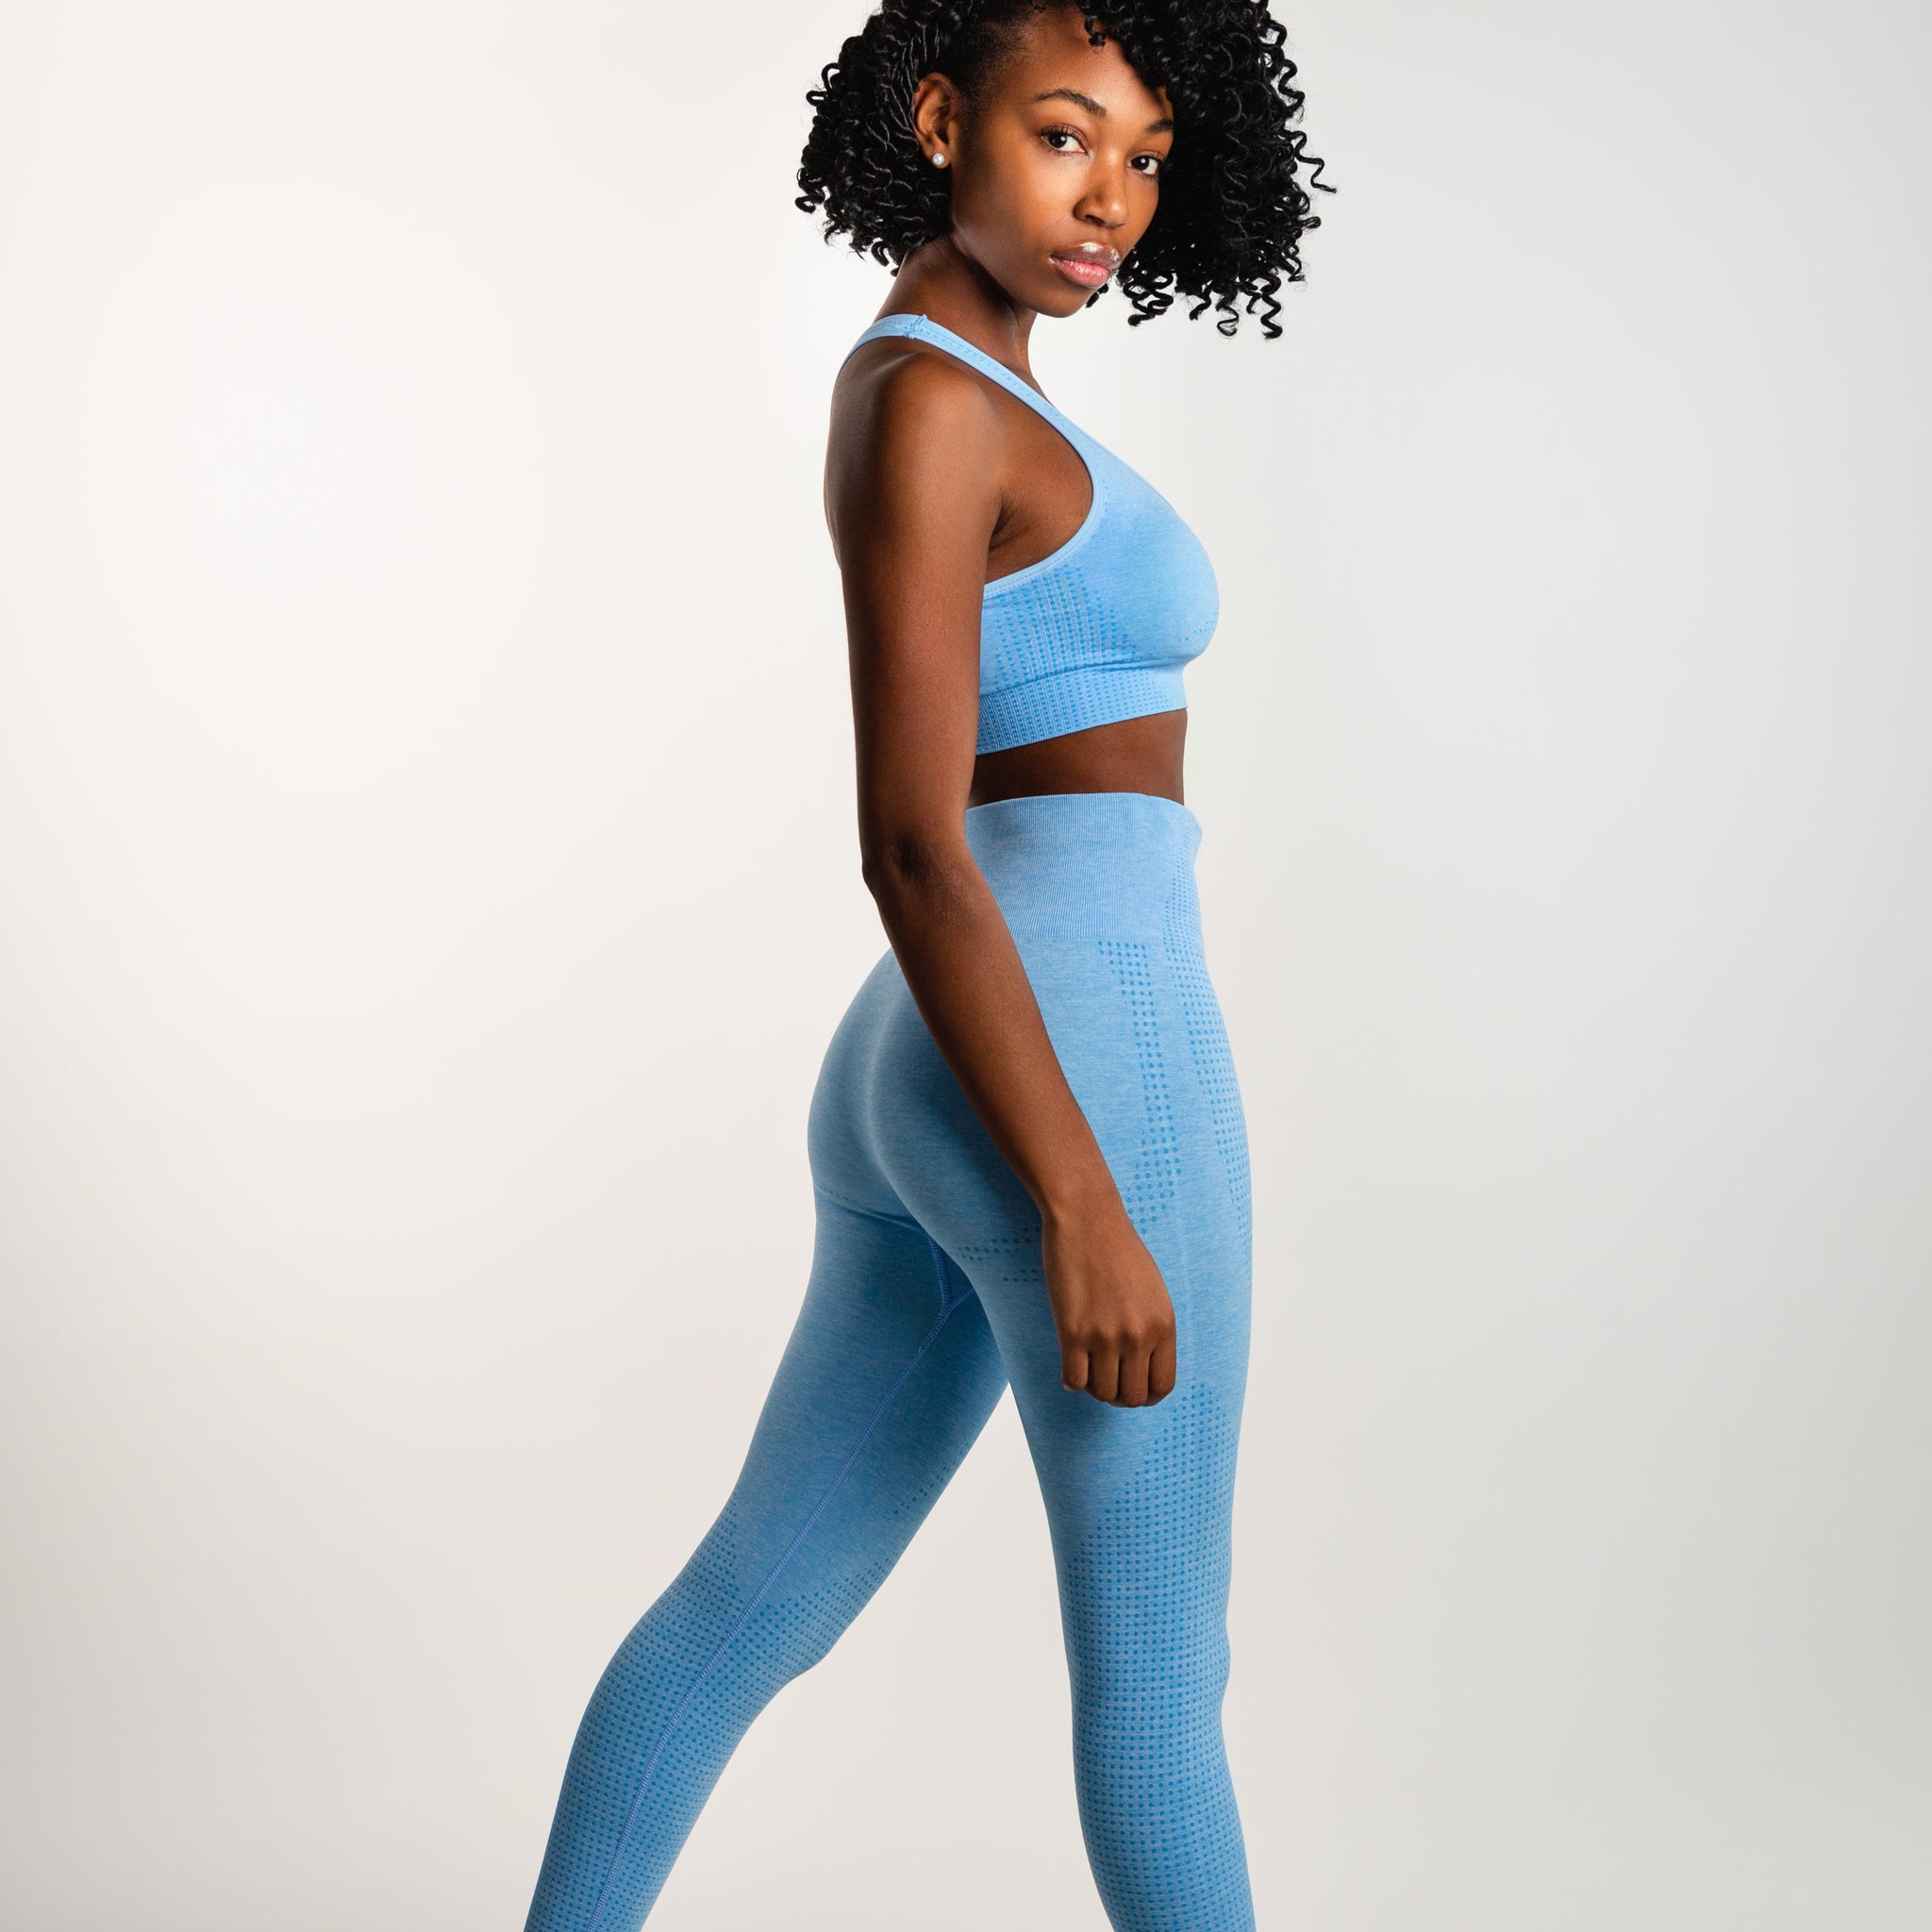 Legging Sport - Vêtements Fitness MQF - Bleu